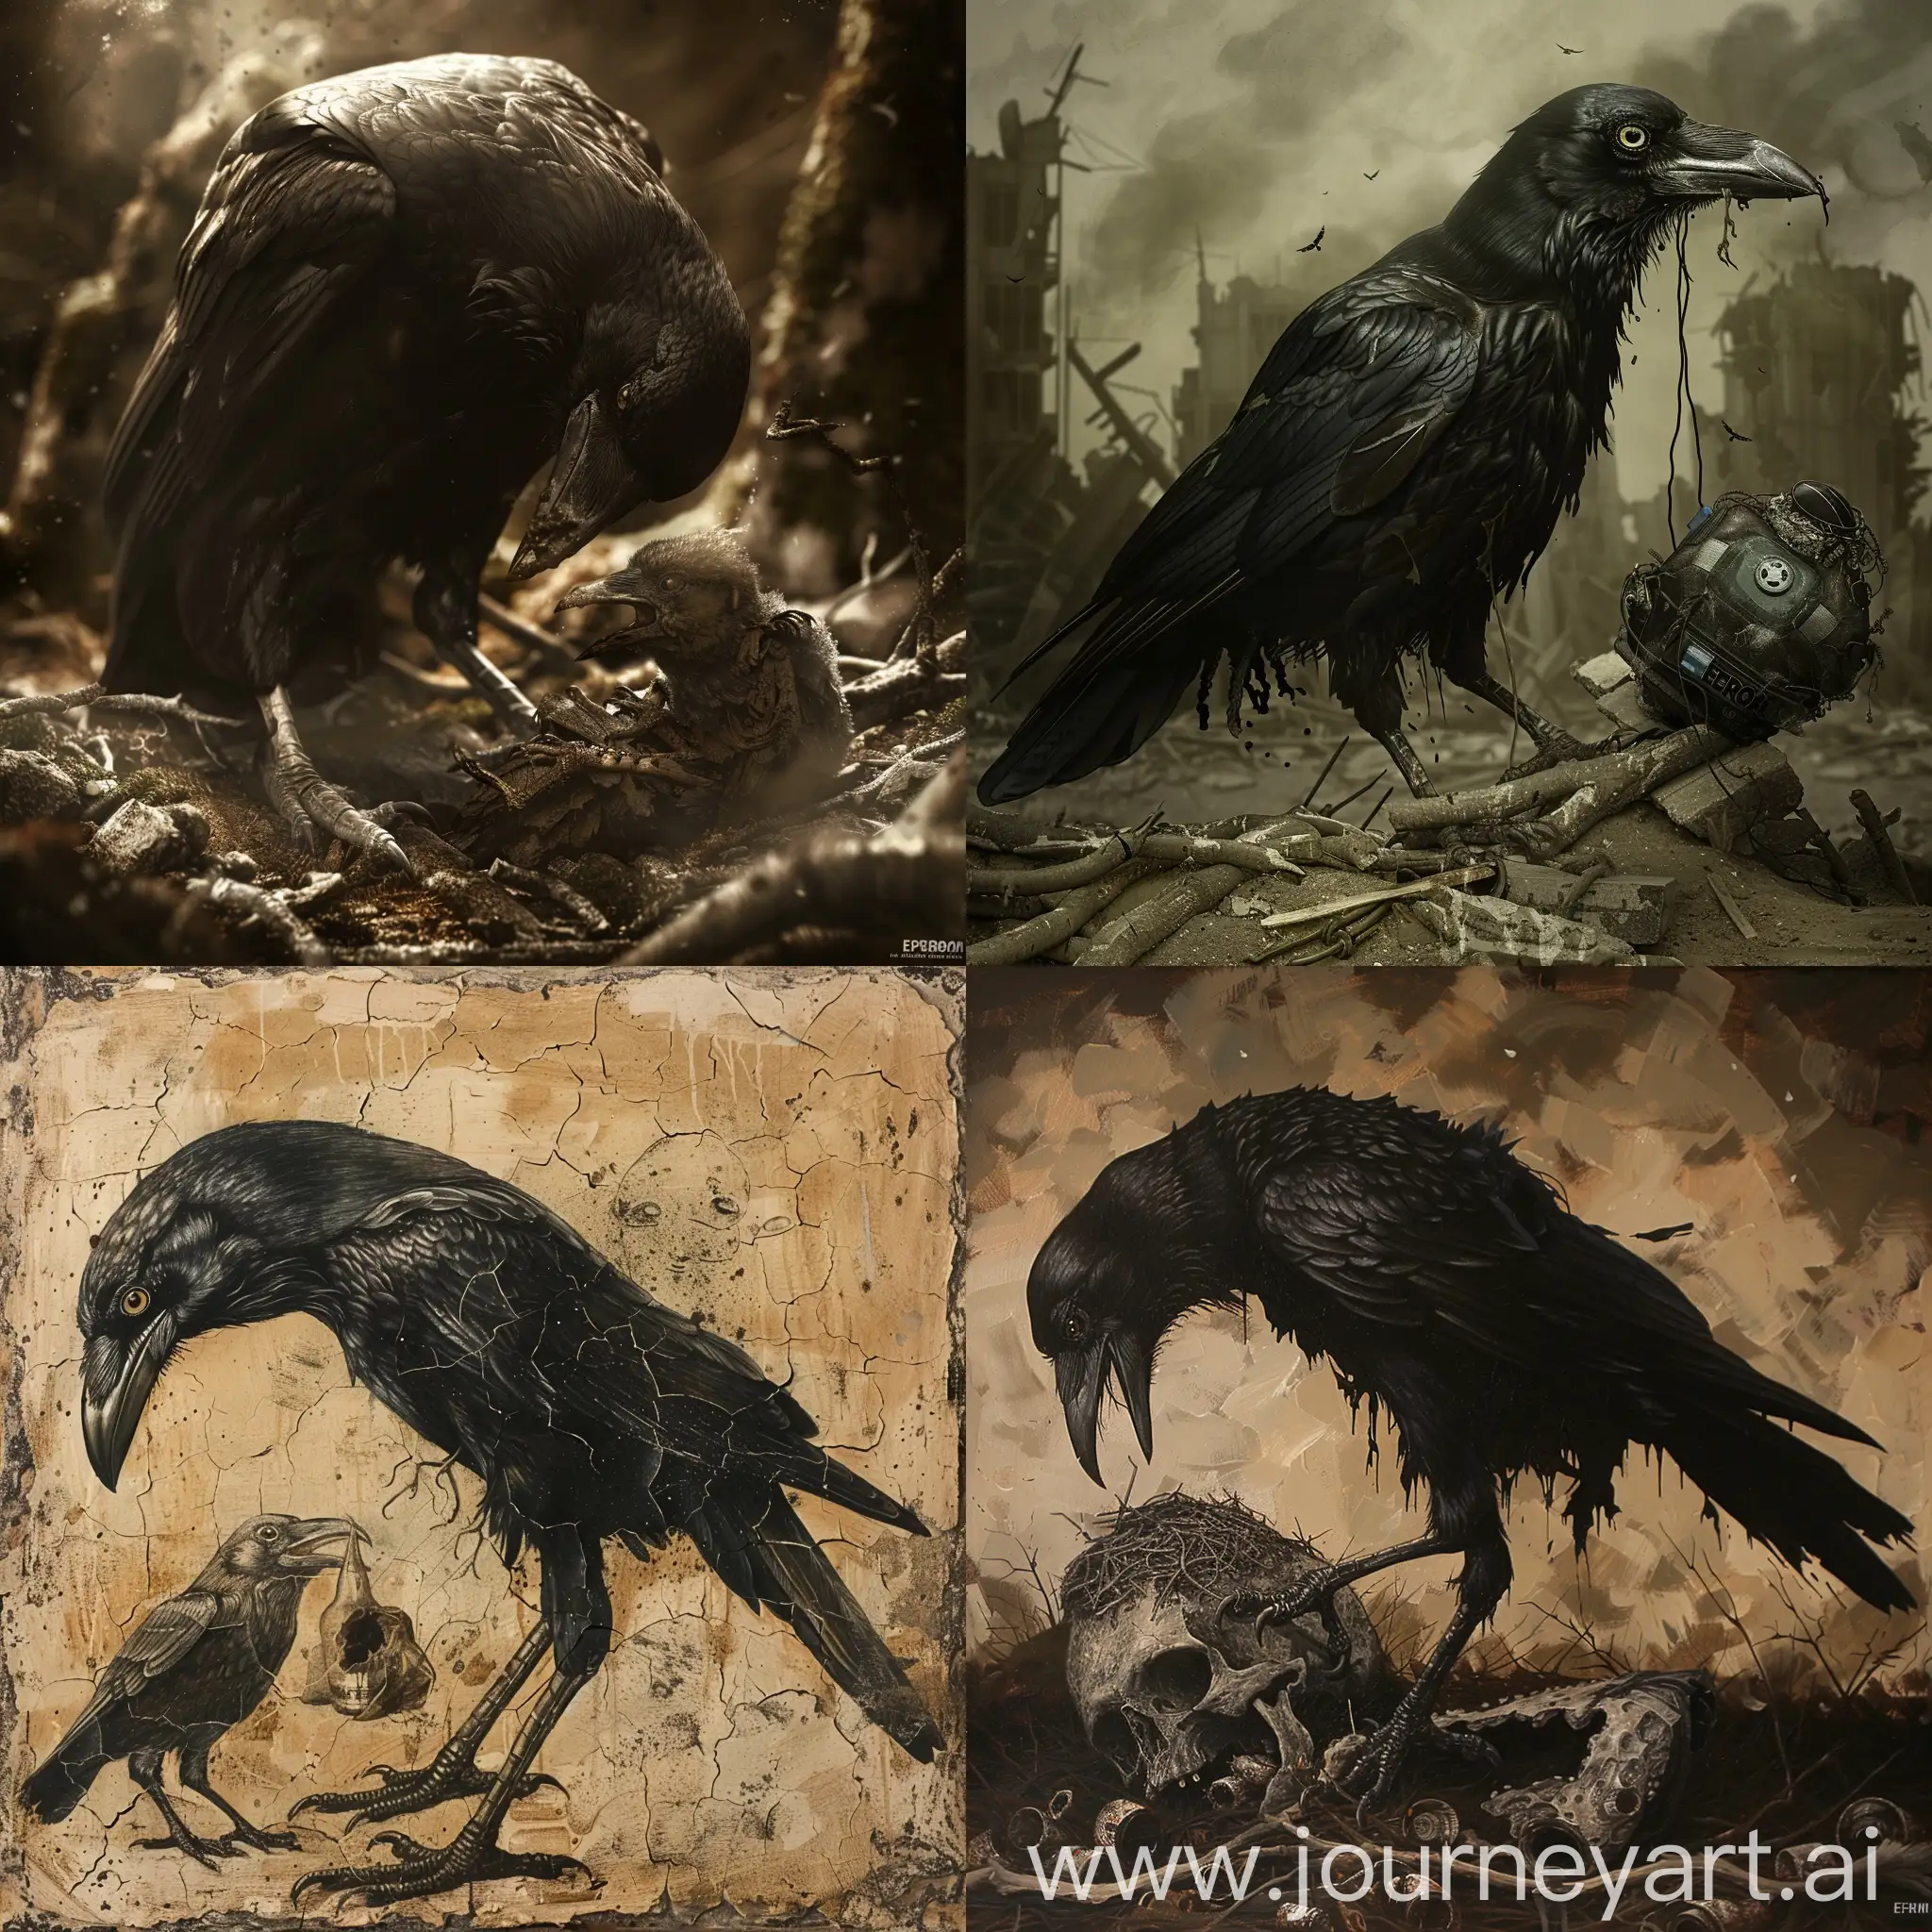 Elderly-Crow-Births-Alcoholic-EMERCOM-Surrealistic-Avian-Transformation